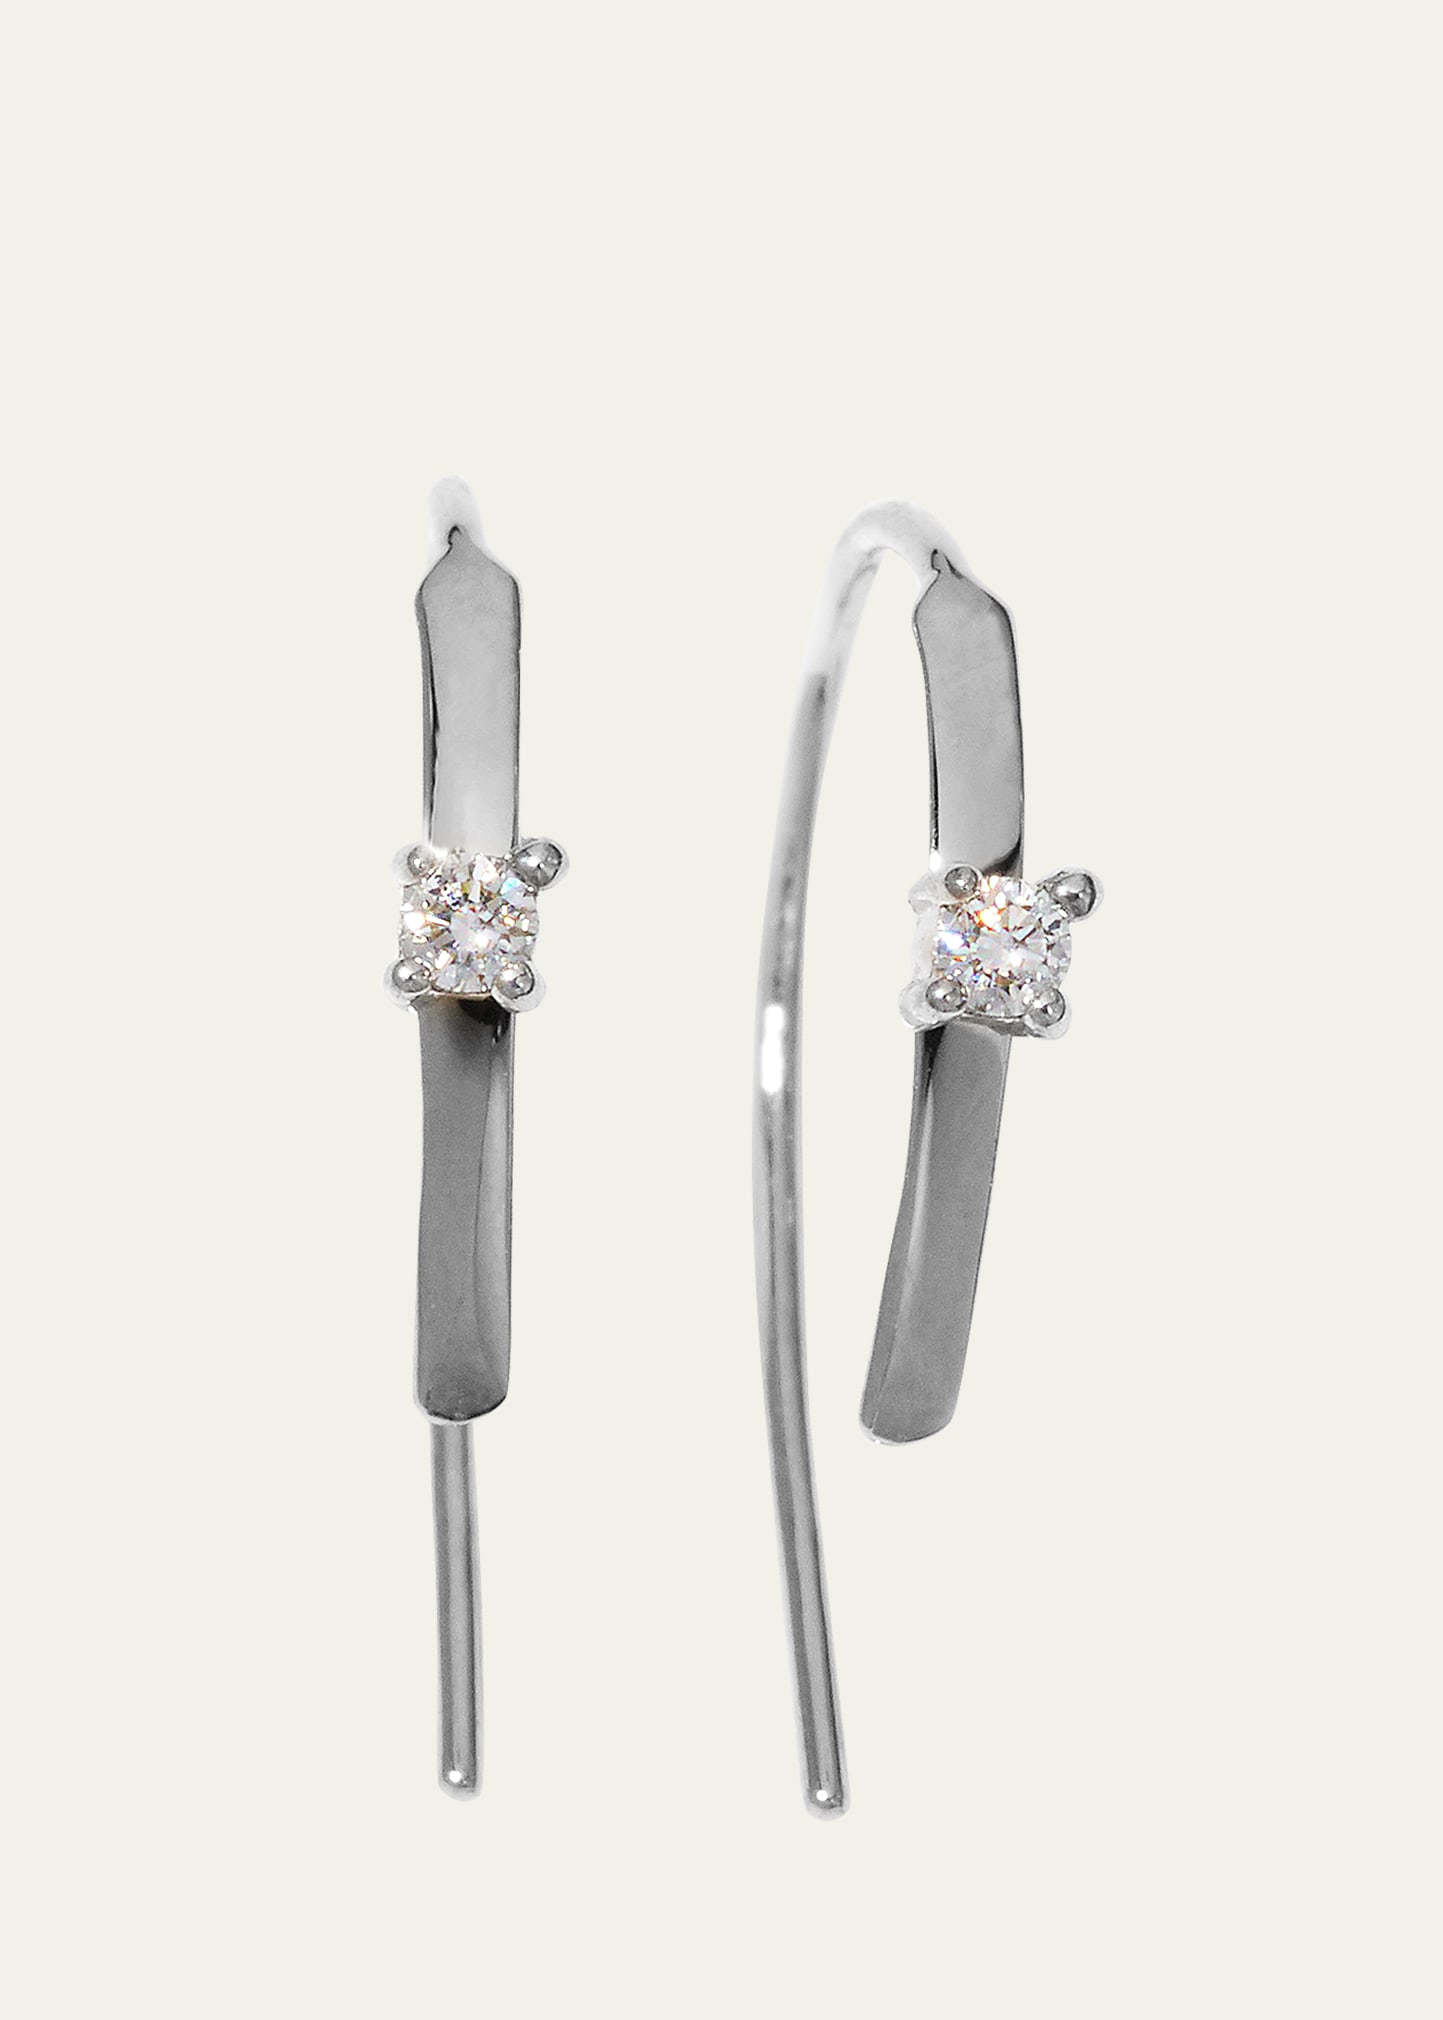 LANA Mini Flat Hooked on Hoop Earrings with Diamonds, 15mm